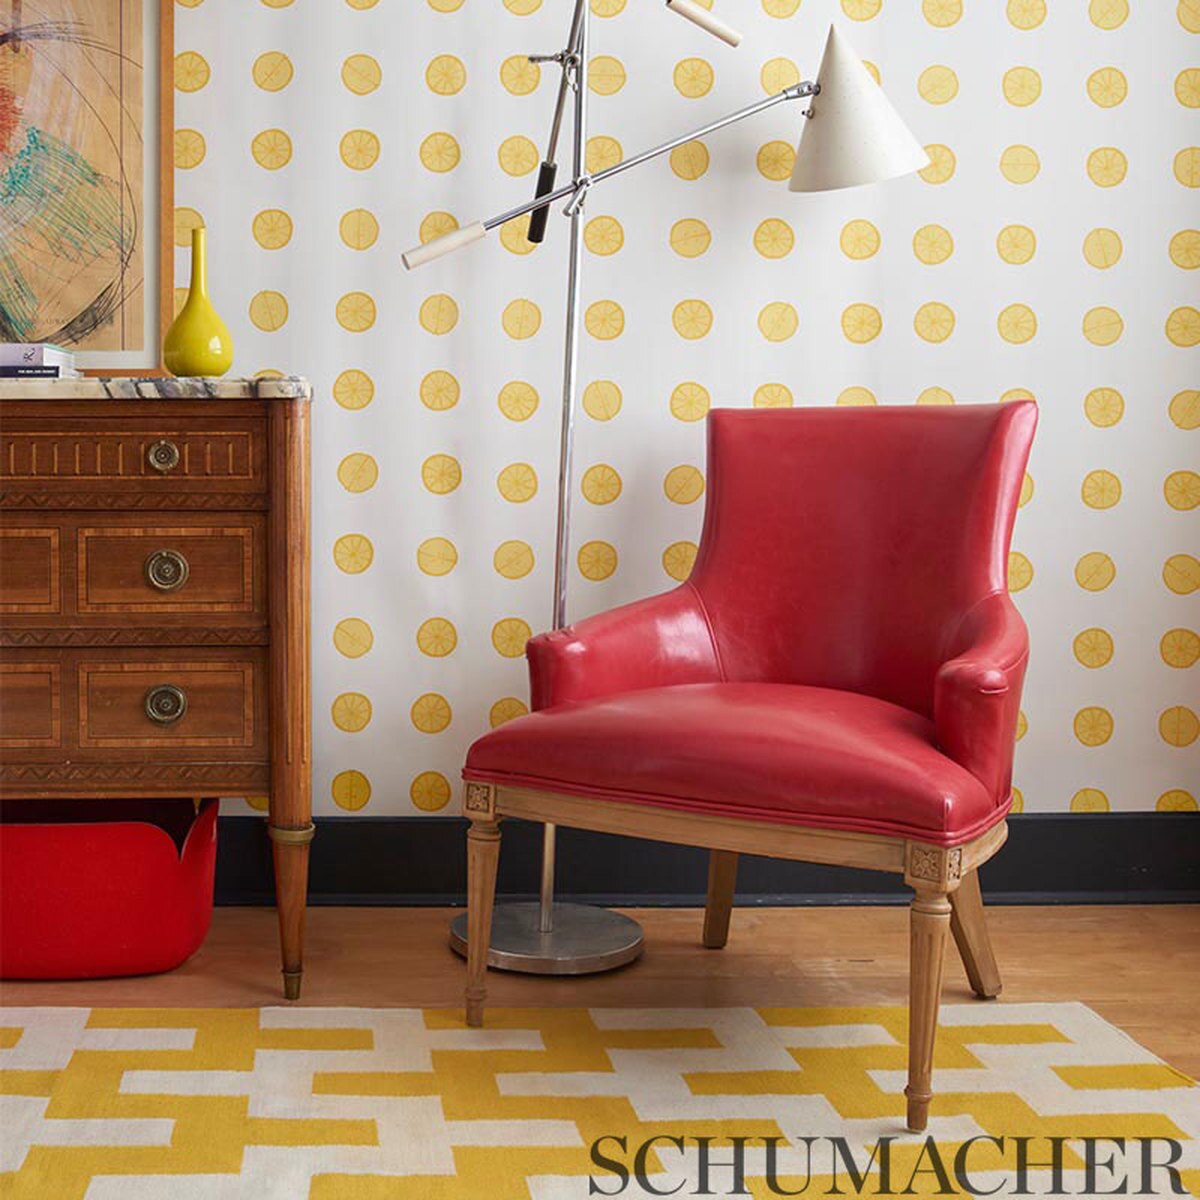 Schumacher Lemonade Wallpaper Lemon - Chest Of Drawers - HD Wallpaper 